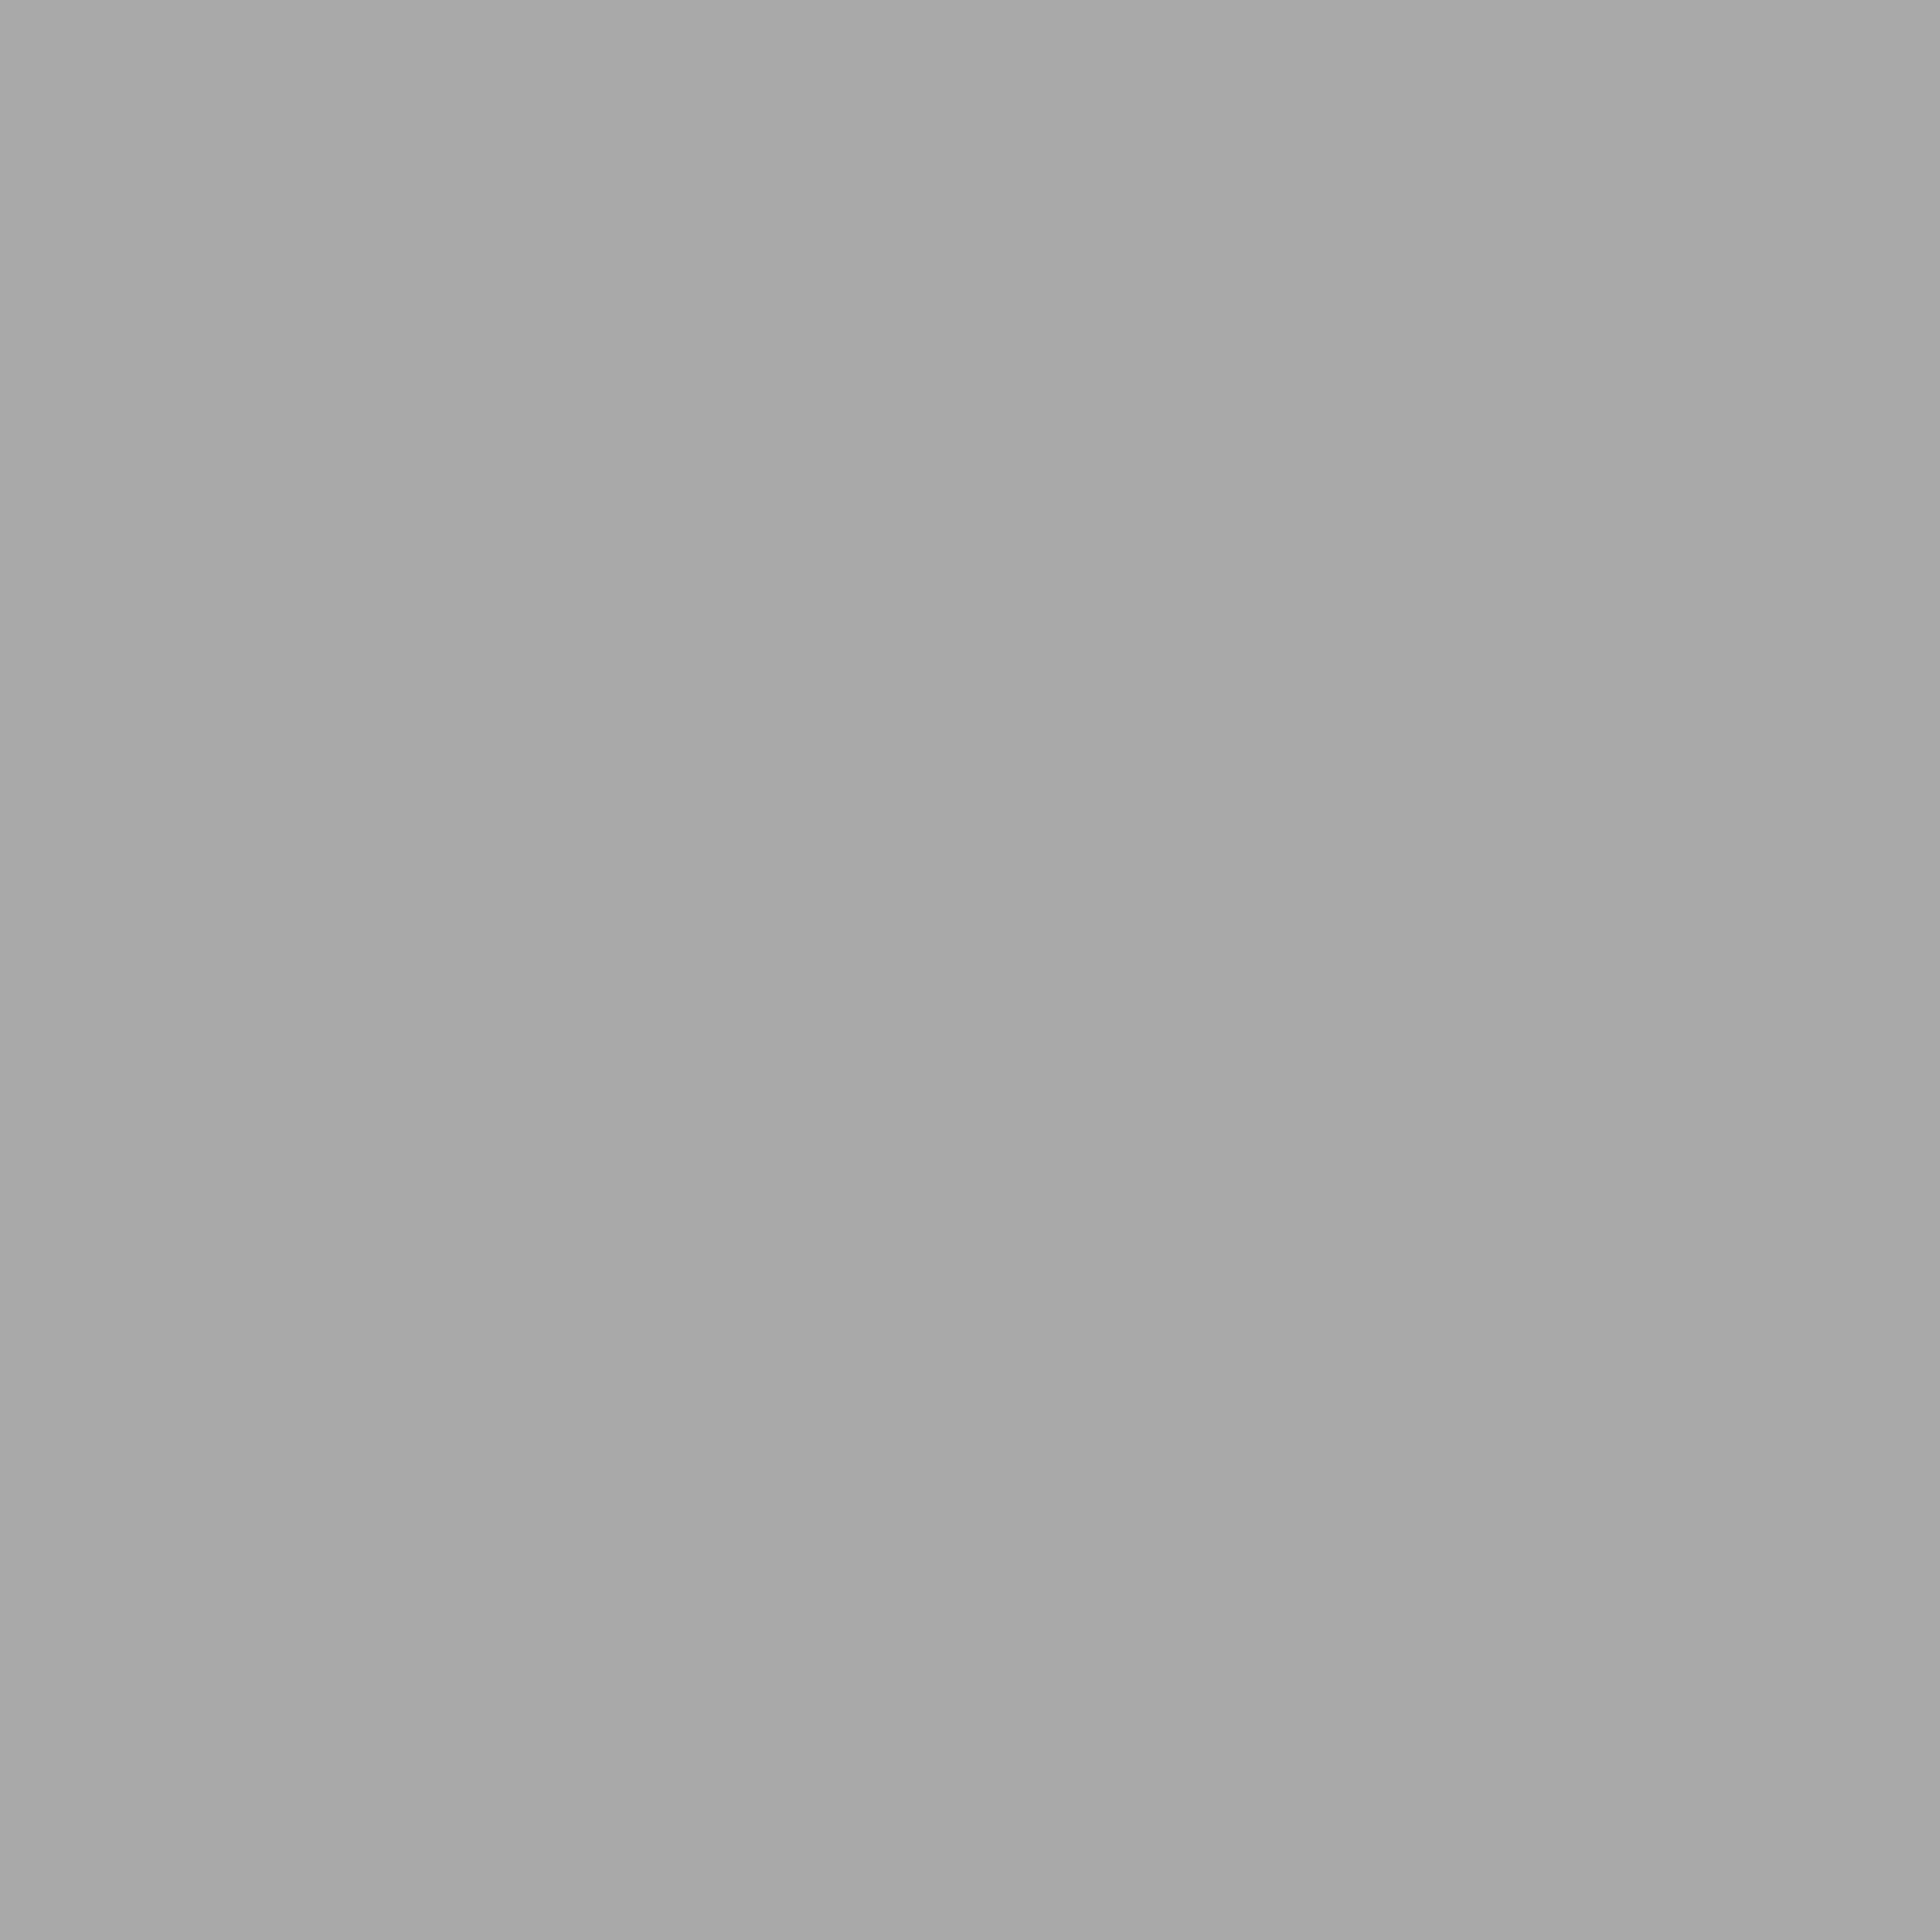 3600x3600 Dark Gray Solid Color Background